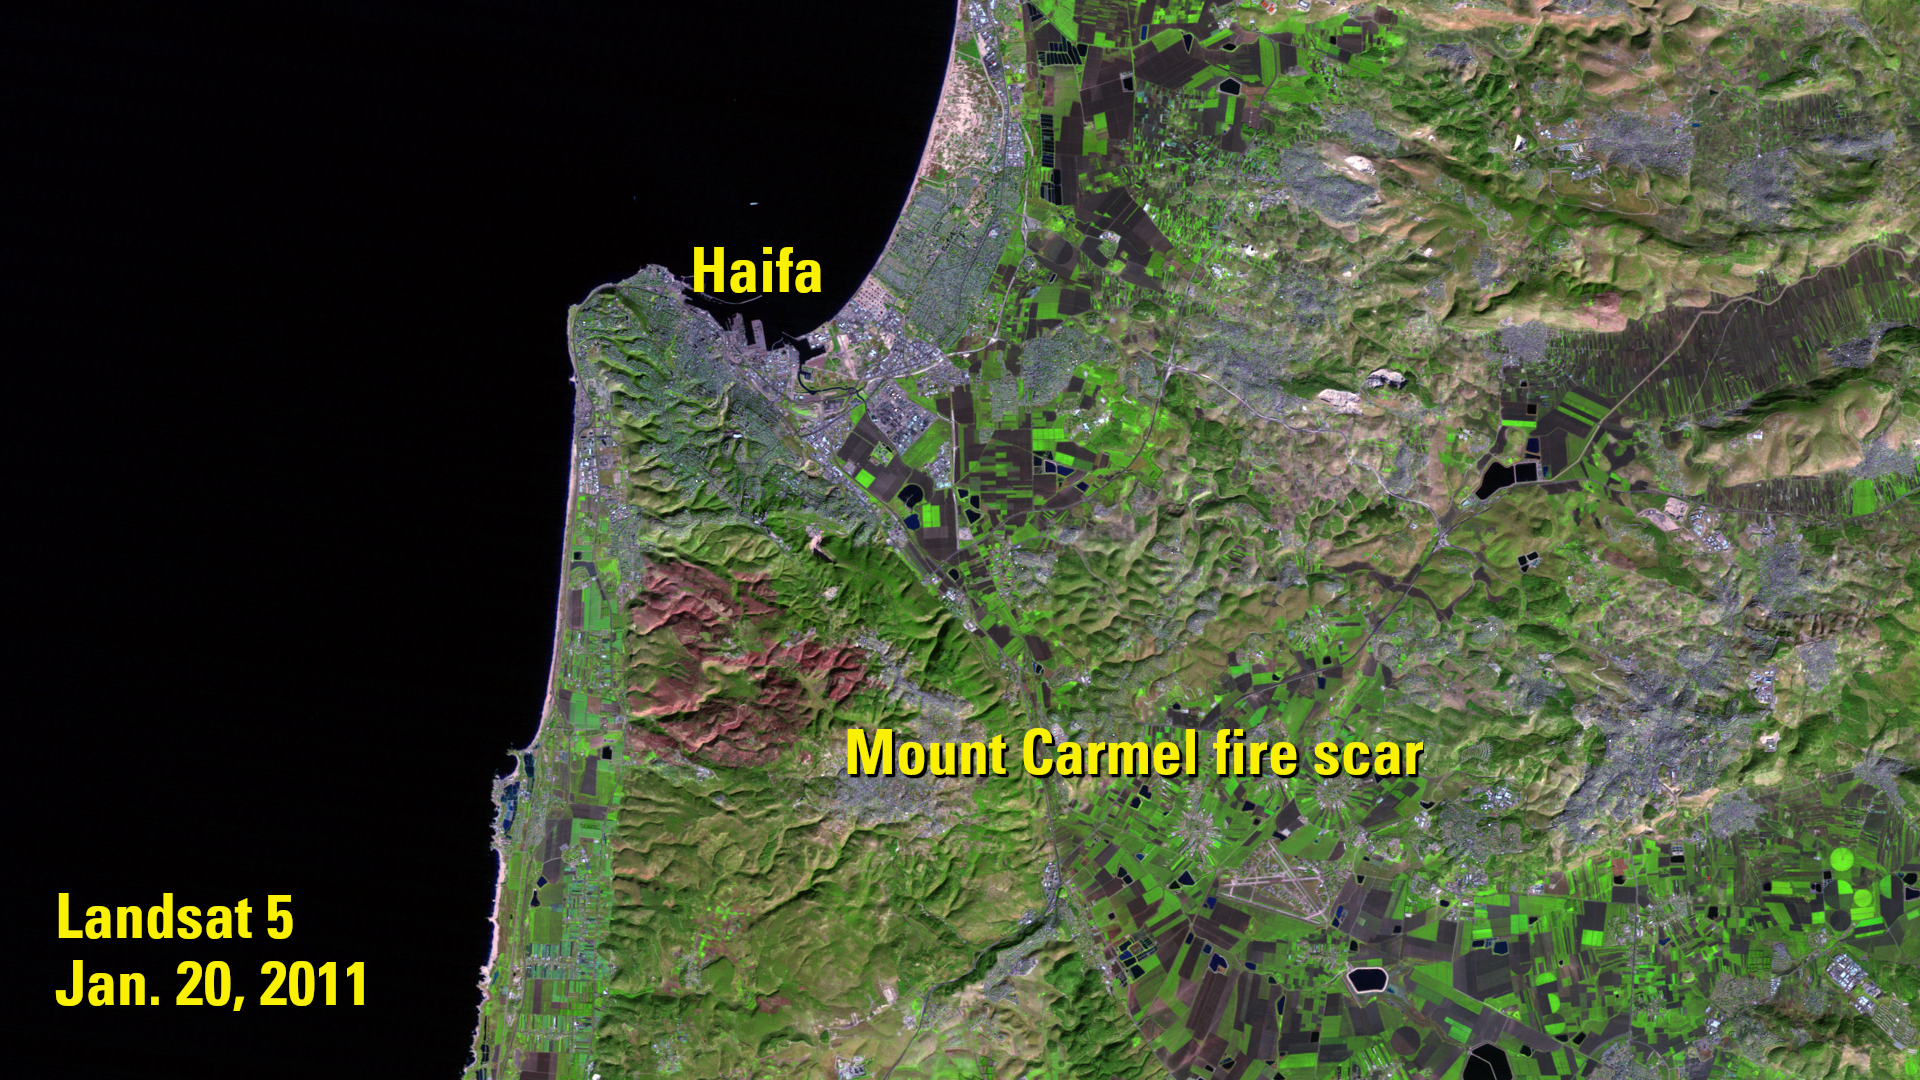 Landsat 5 image of Mount Carmel fire from January 20, 2011